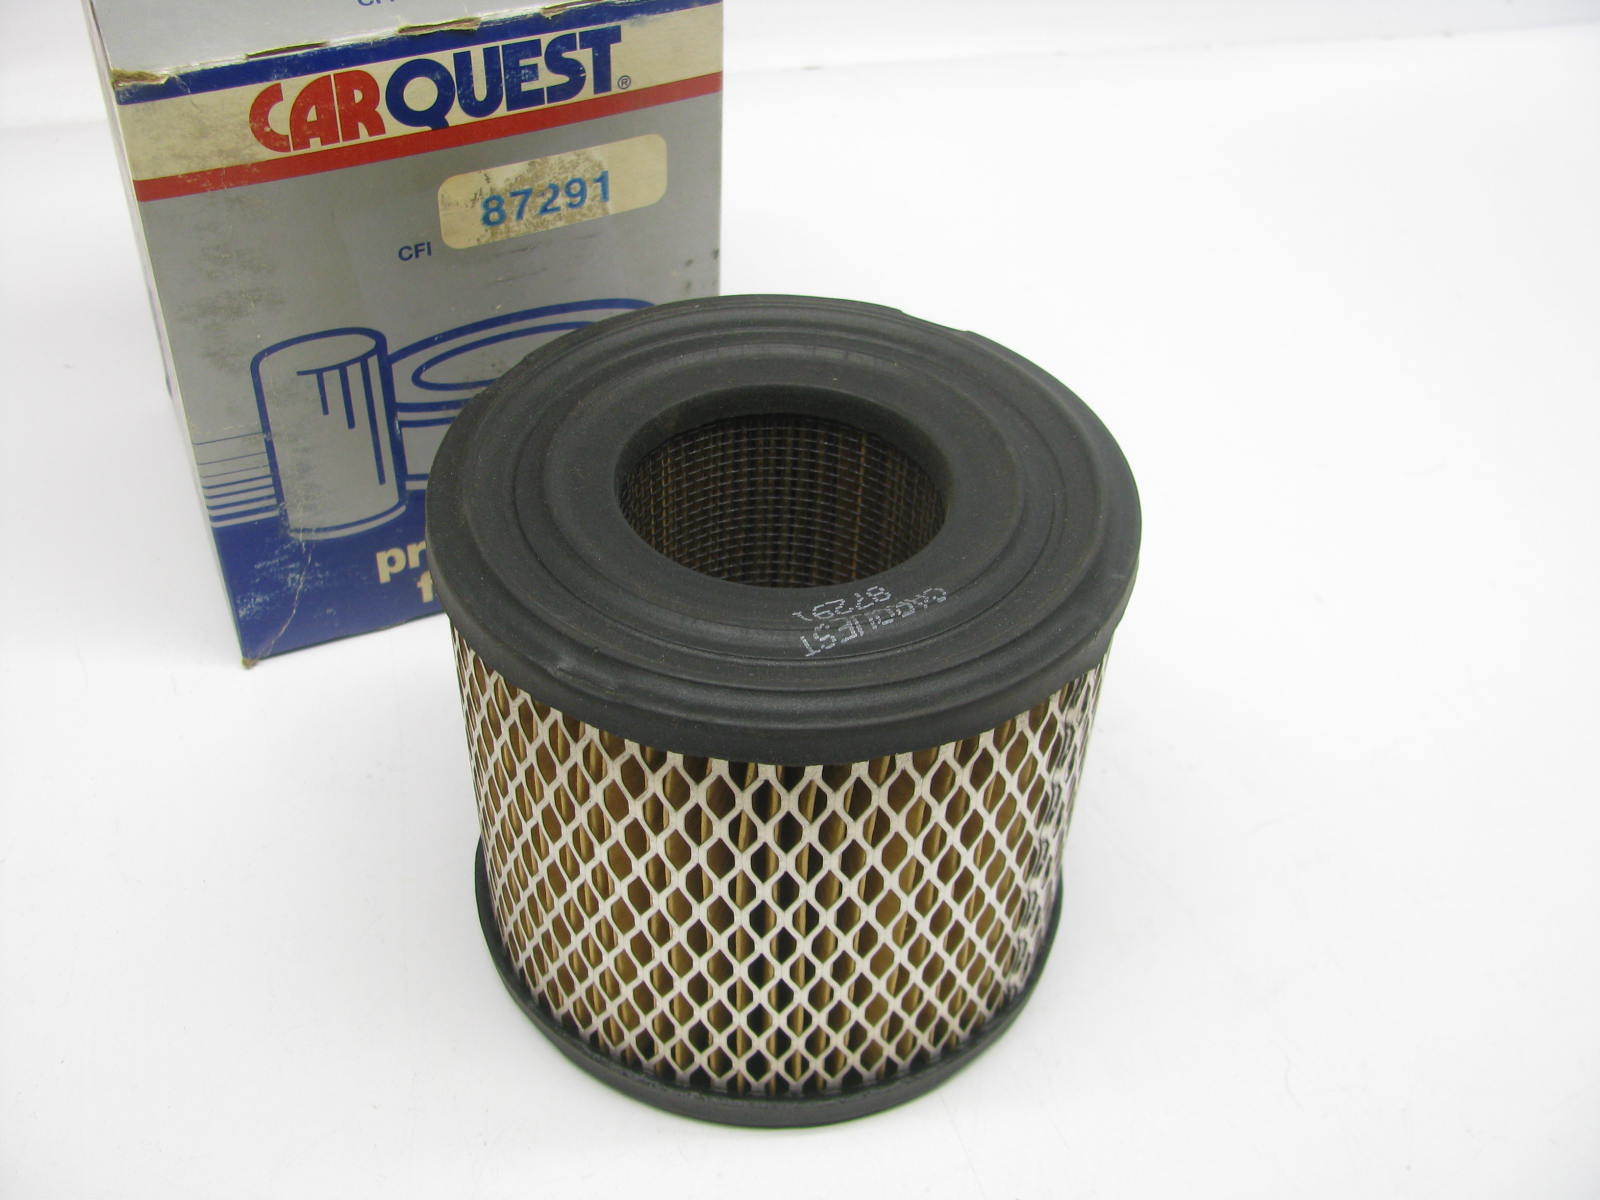 Carquest 87291 Air Filter Replaces CA10983 42291 A13338 AF206 AF4574 P606290